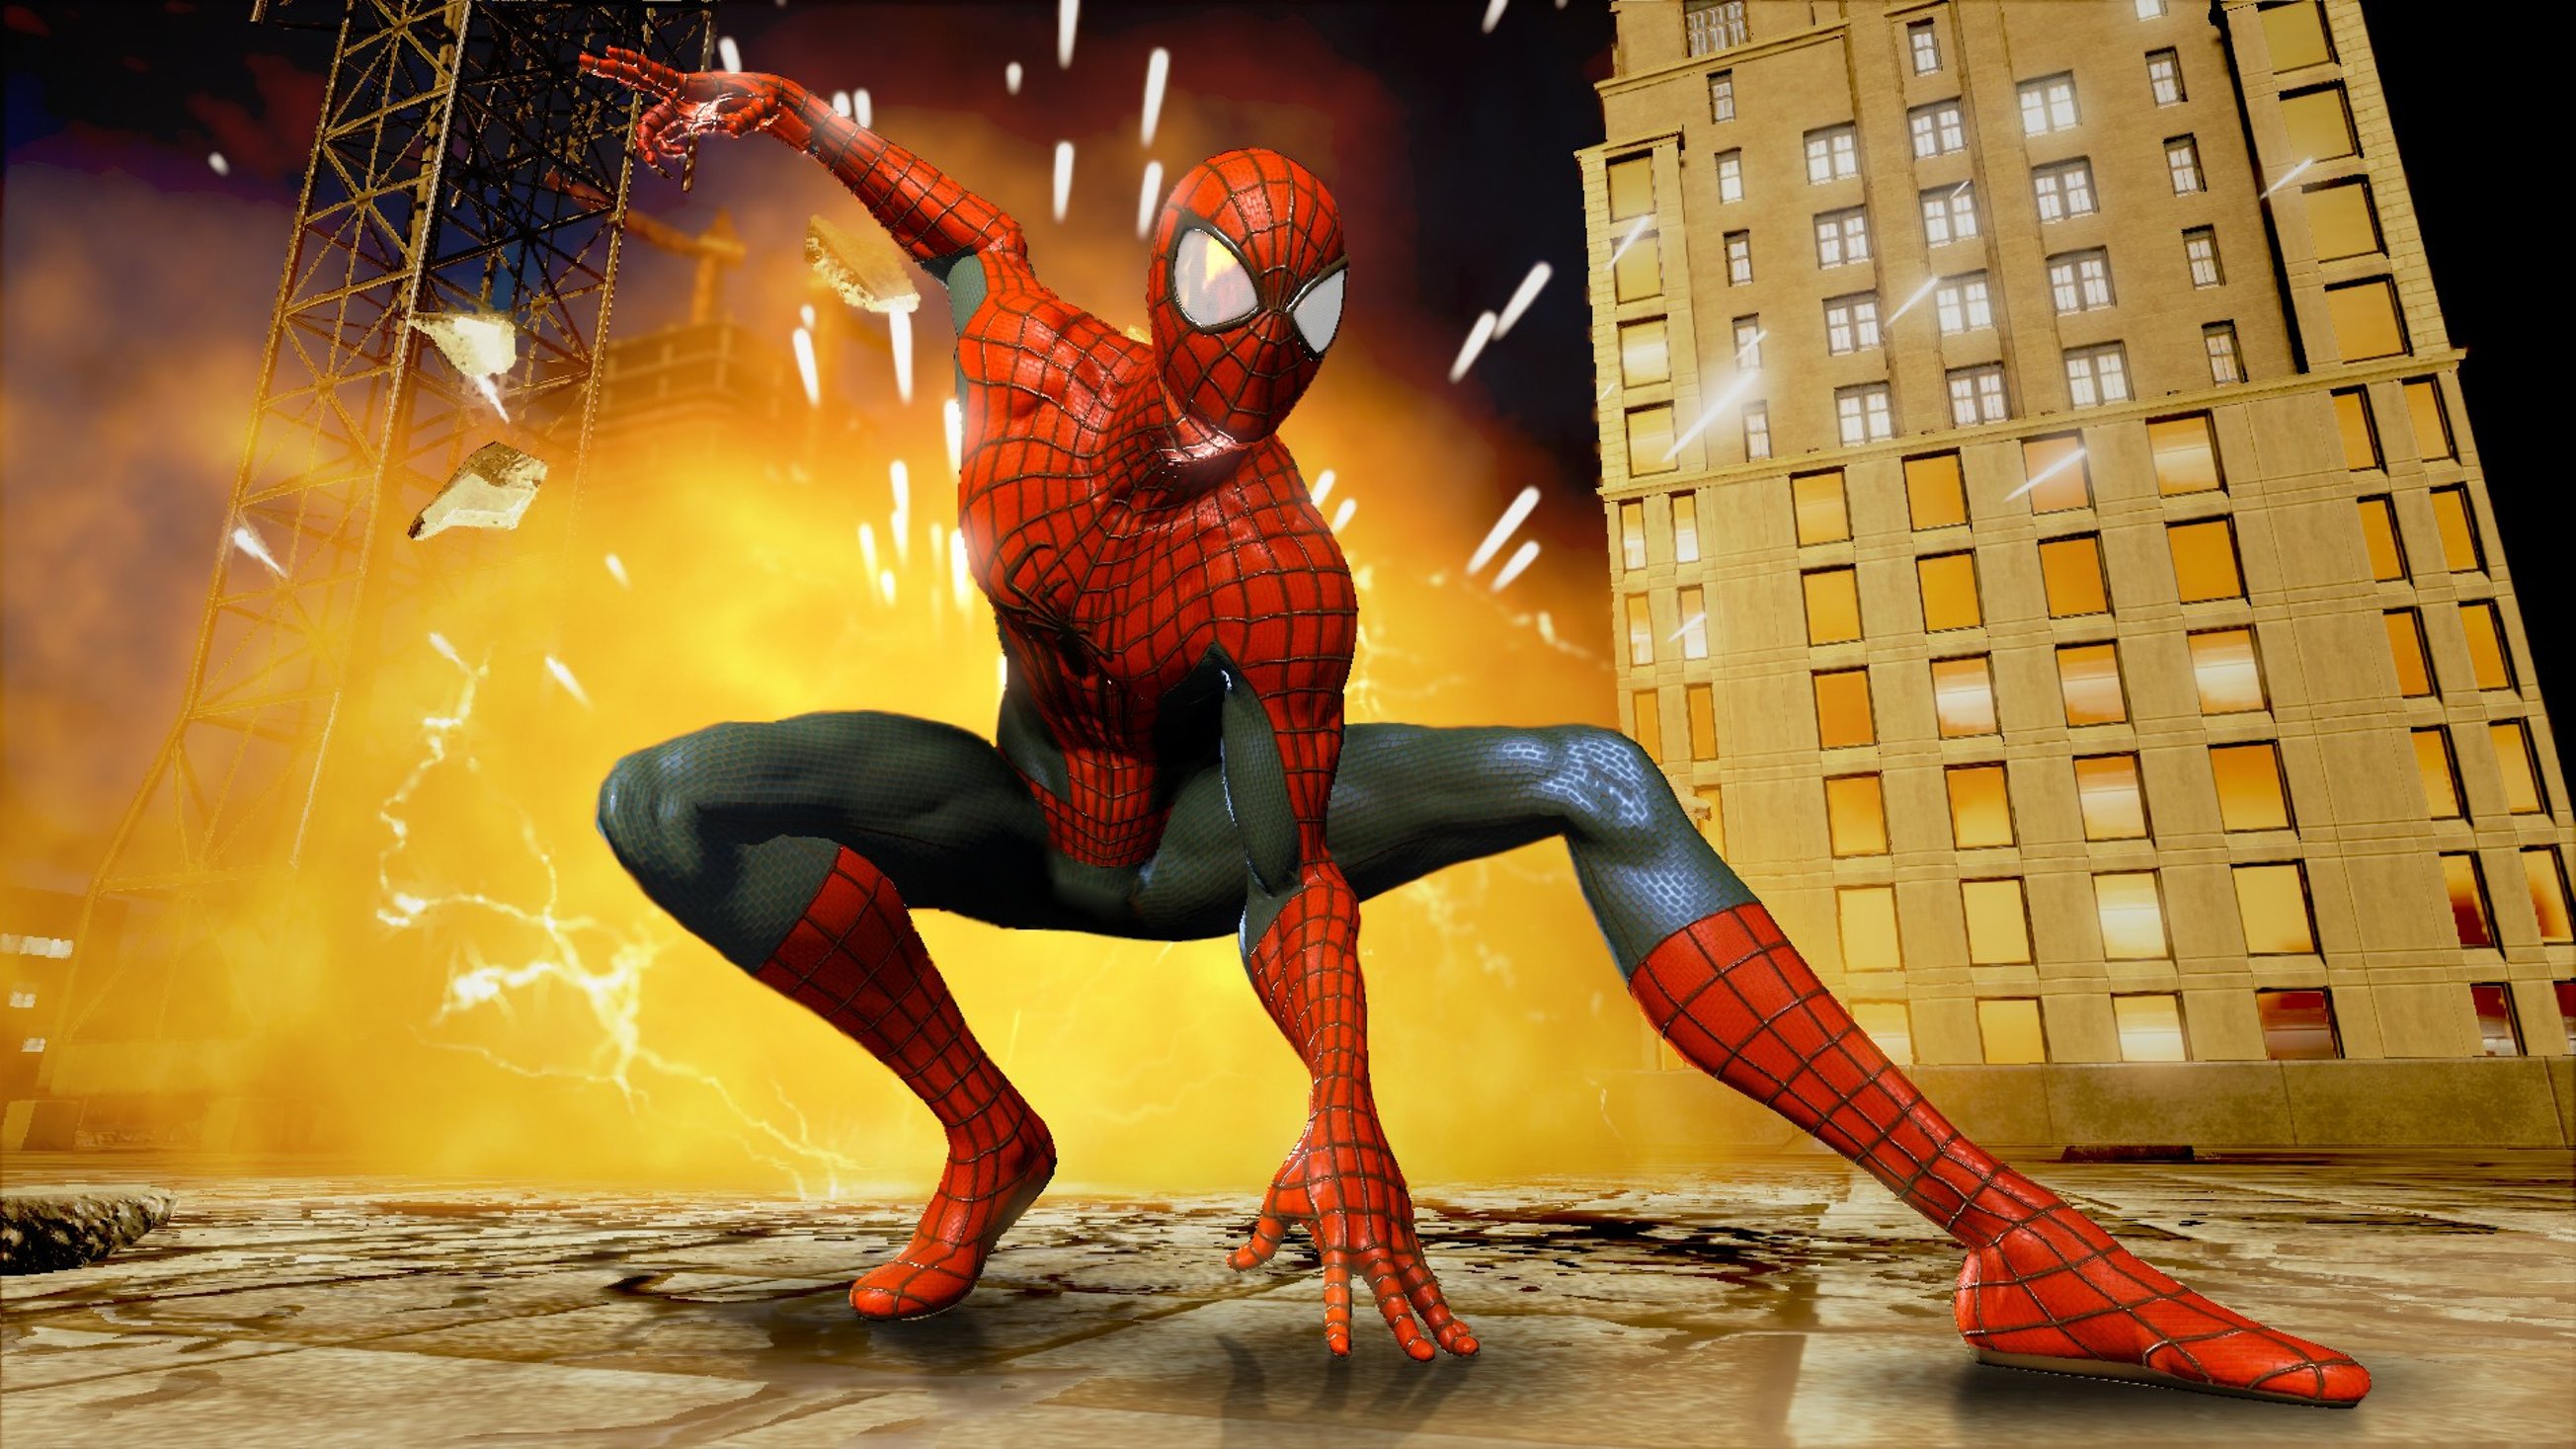 Паук 2 х. Spider-man 2. Амазинг Спайдер Мэн 2. The amazing Spider-man игра 2014. The amazing Spider-man 2 (игра, 2014).